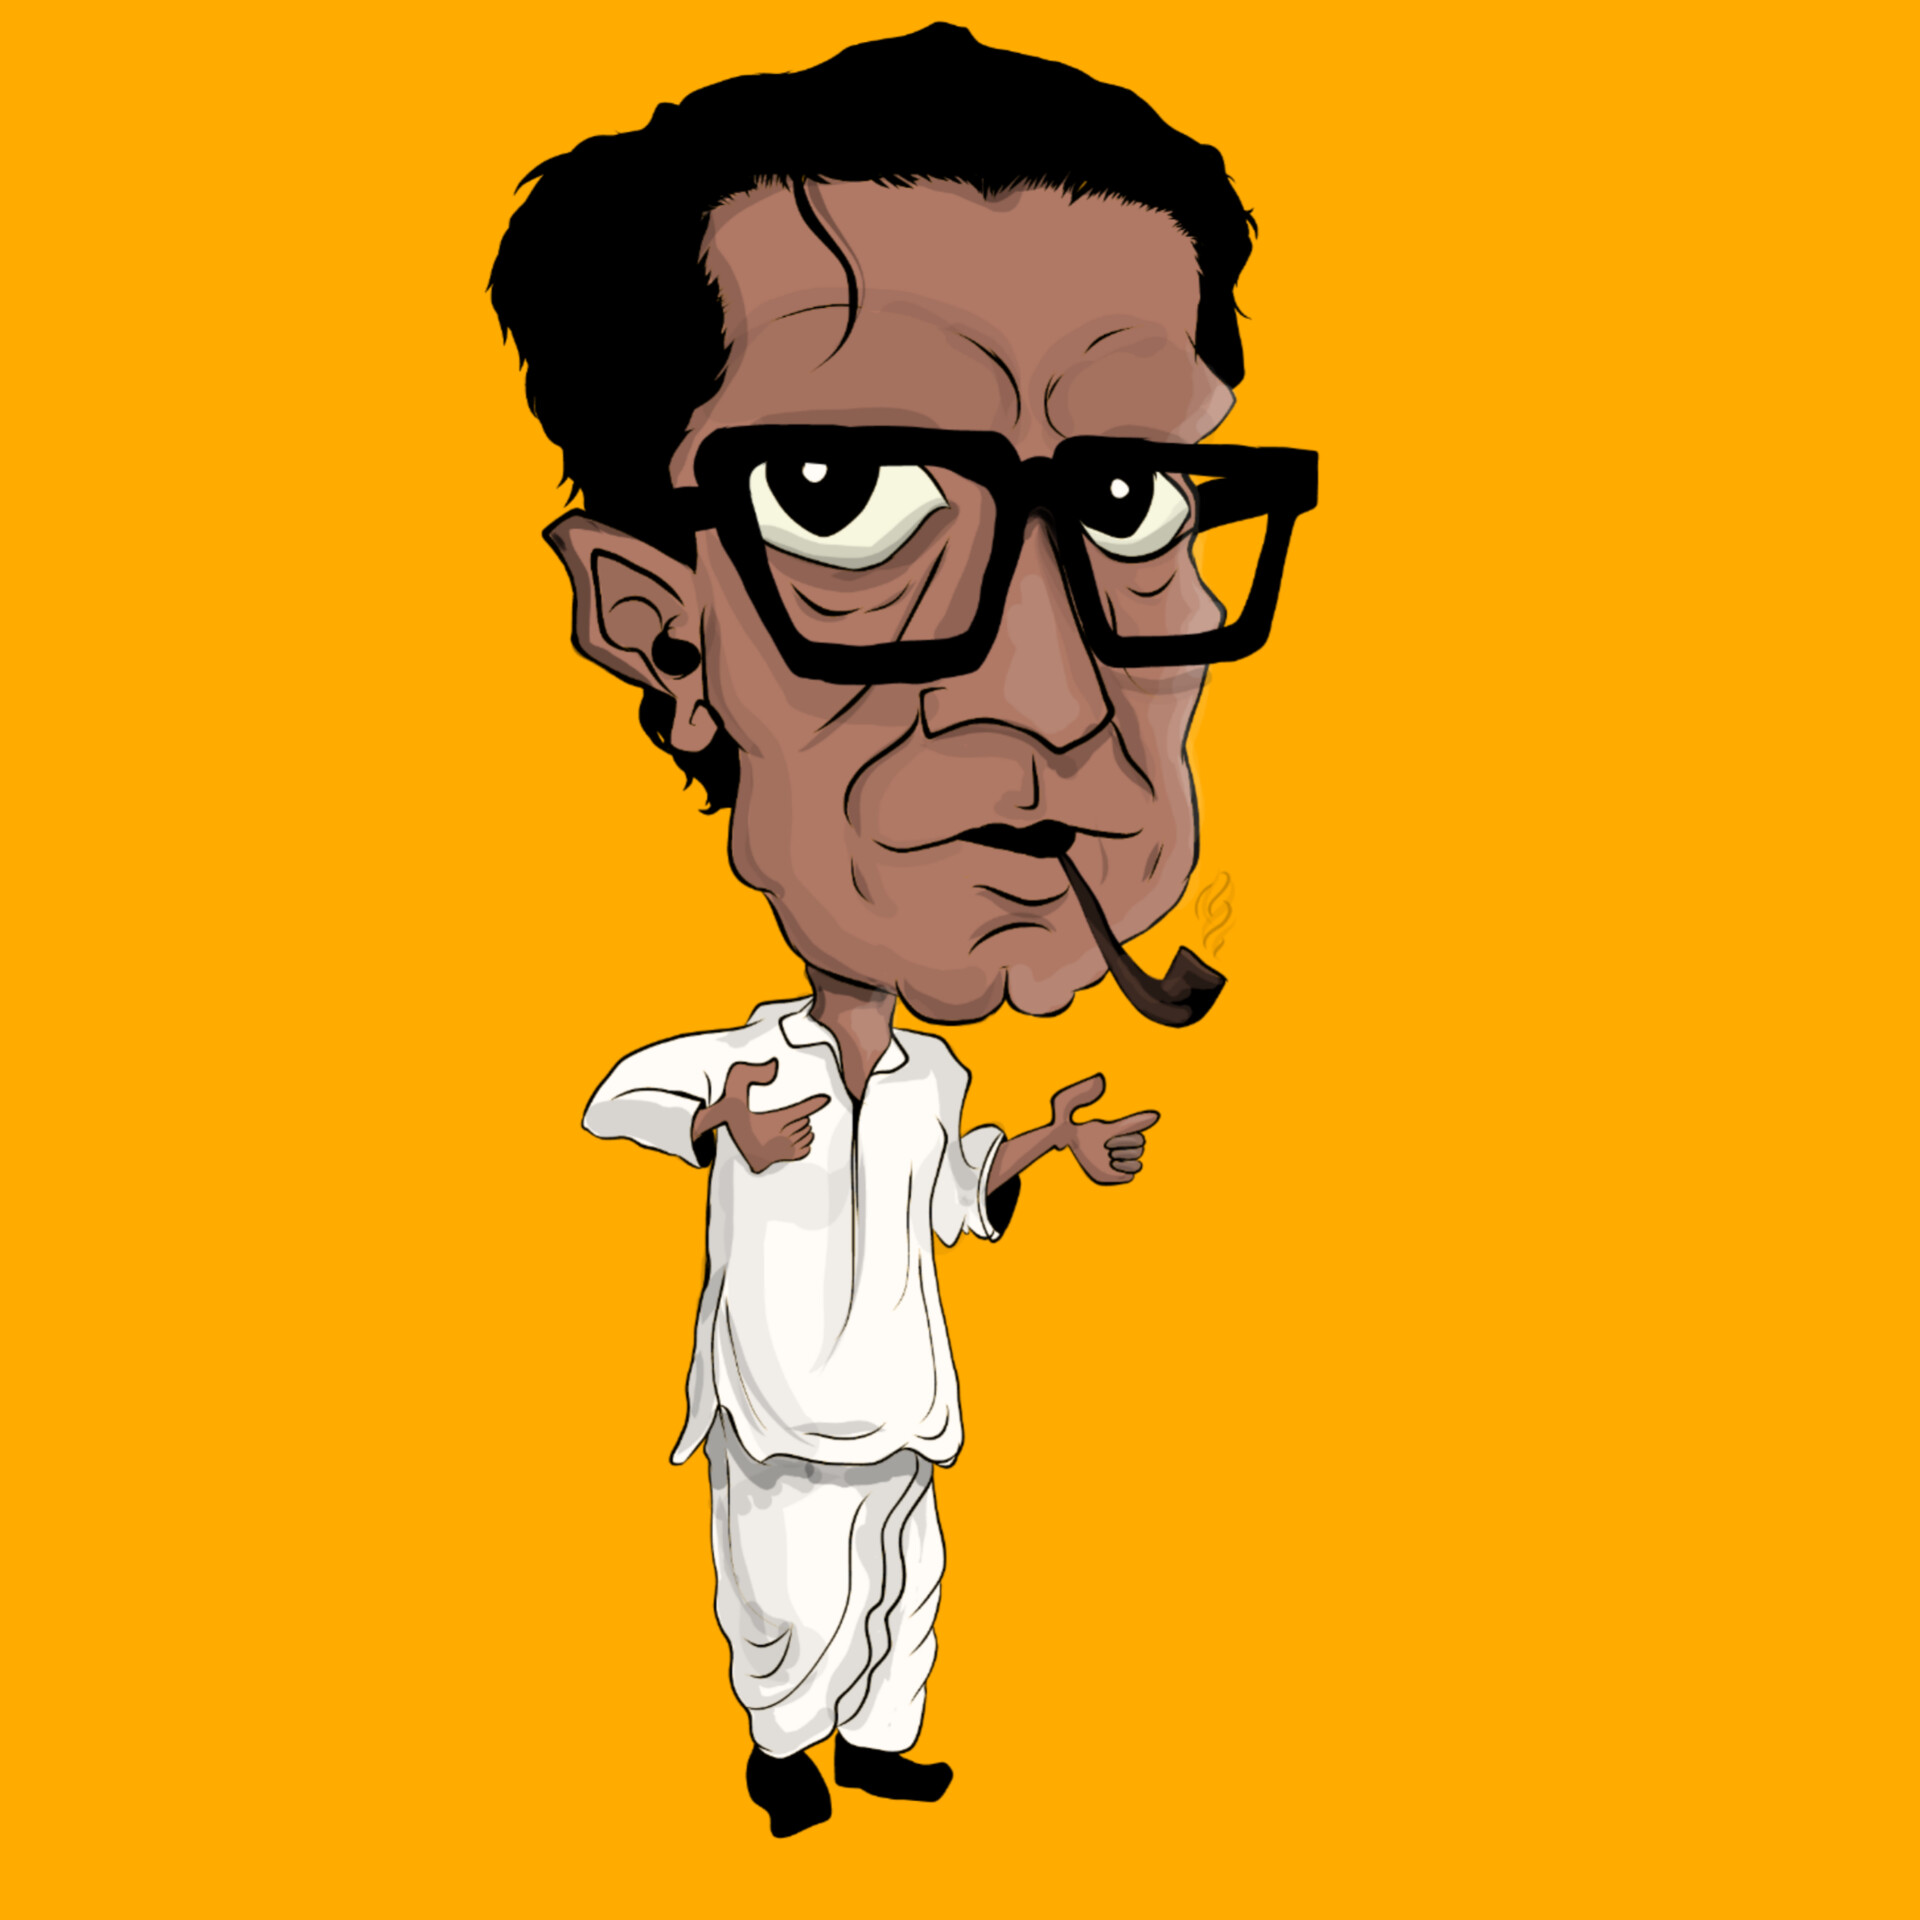 ArtStation - Caricature of Satyajit Ray